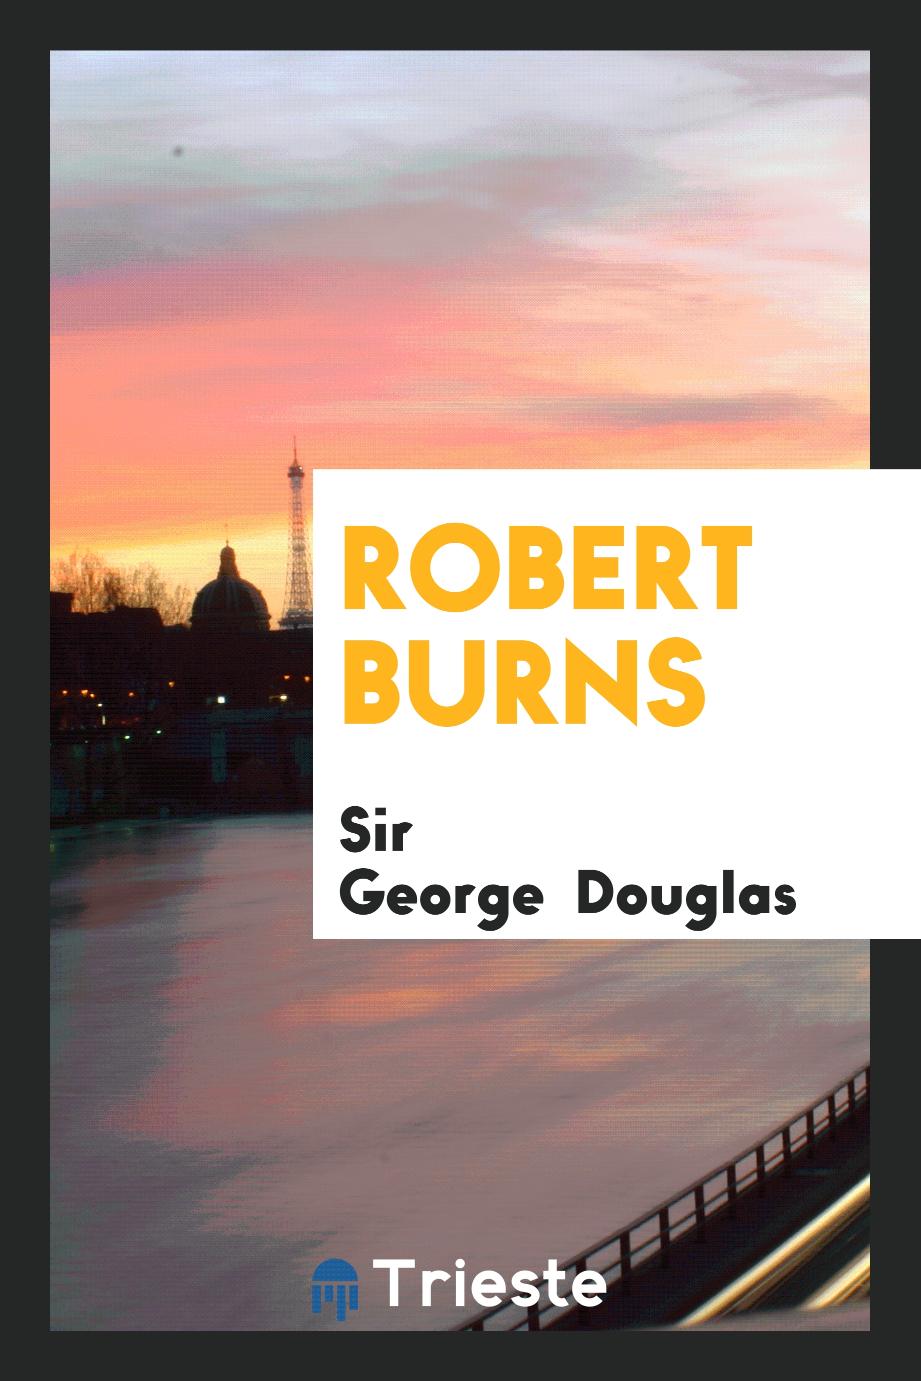 Robert Burns